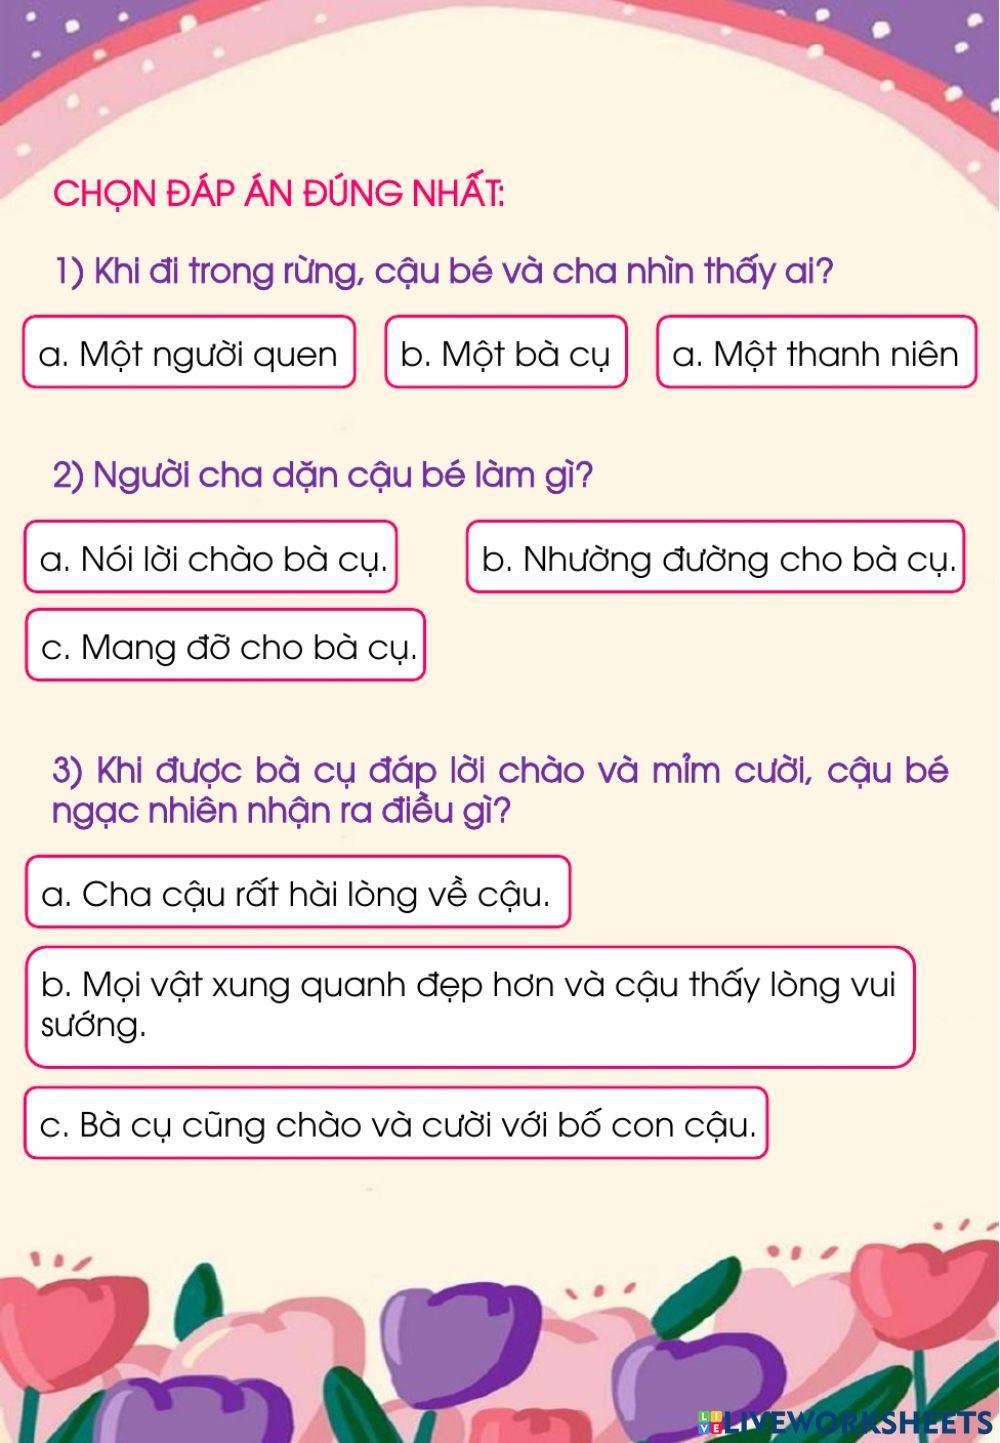 BTCT 28 - Tiếng Việt